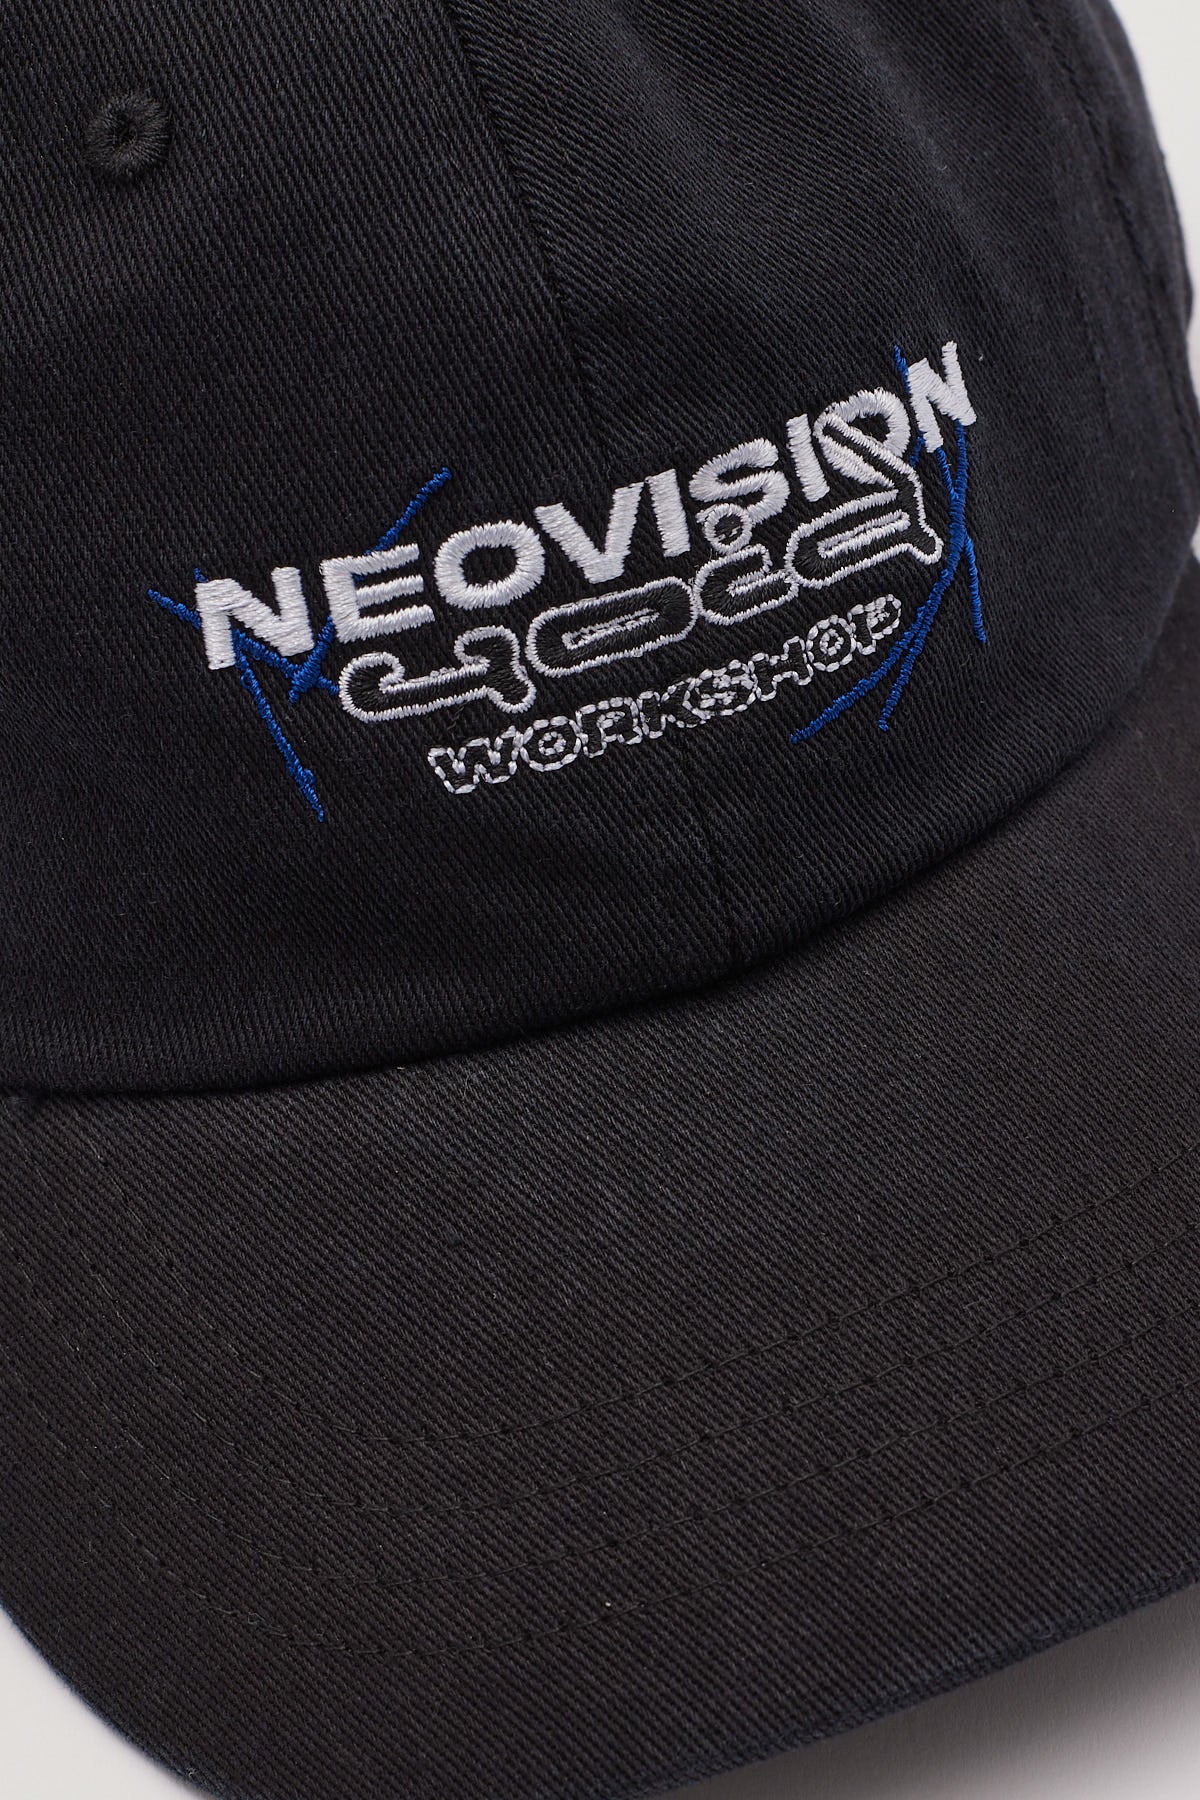 Neovision Exoplanet Dad Cap Black